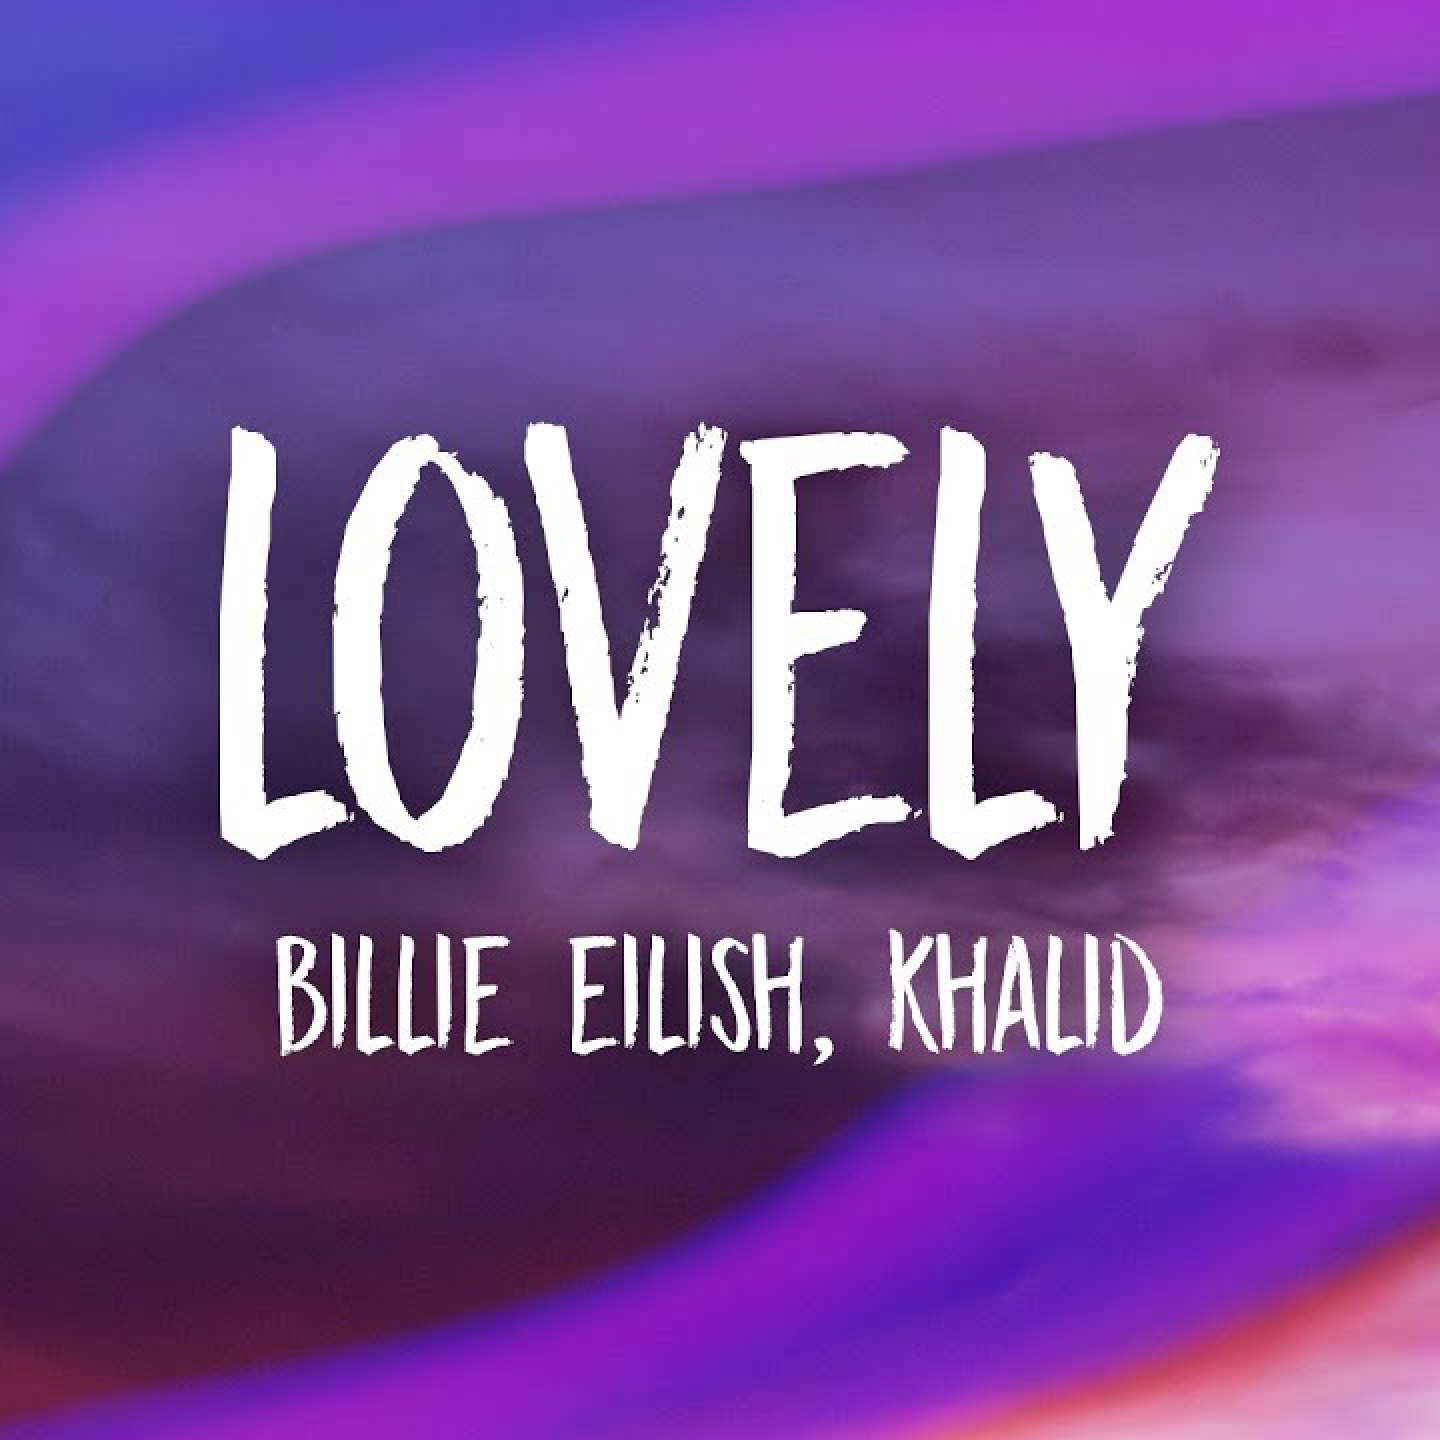 Lovely песня слушать. Lovely Billie. Lovely обложка Билли. Billie Eilish feat. Khalid - Lovely. Billie Eilish Khalid.